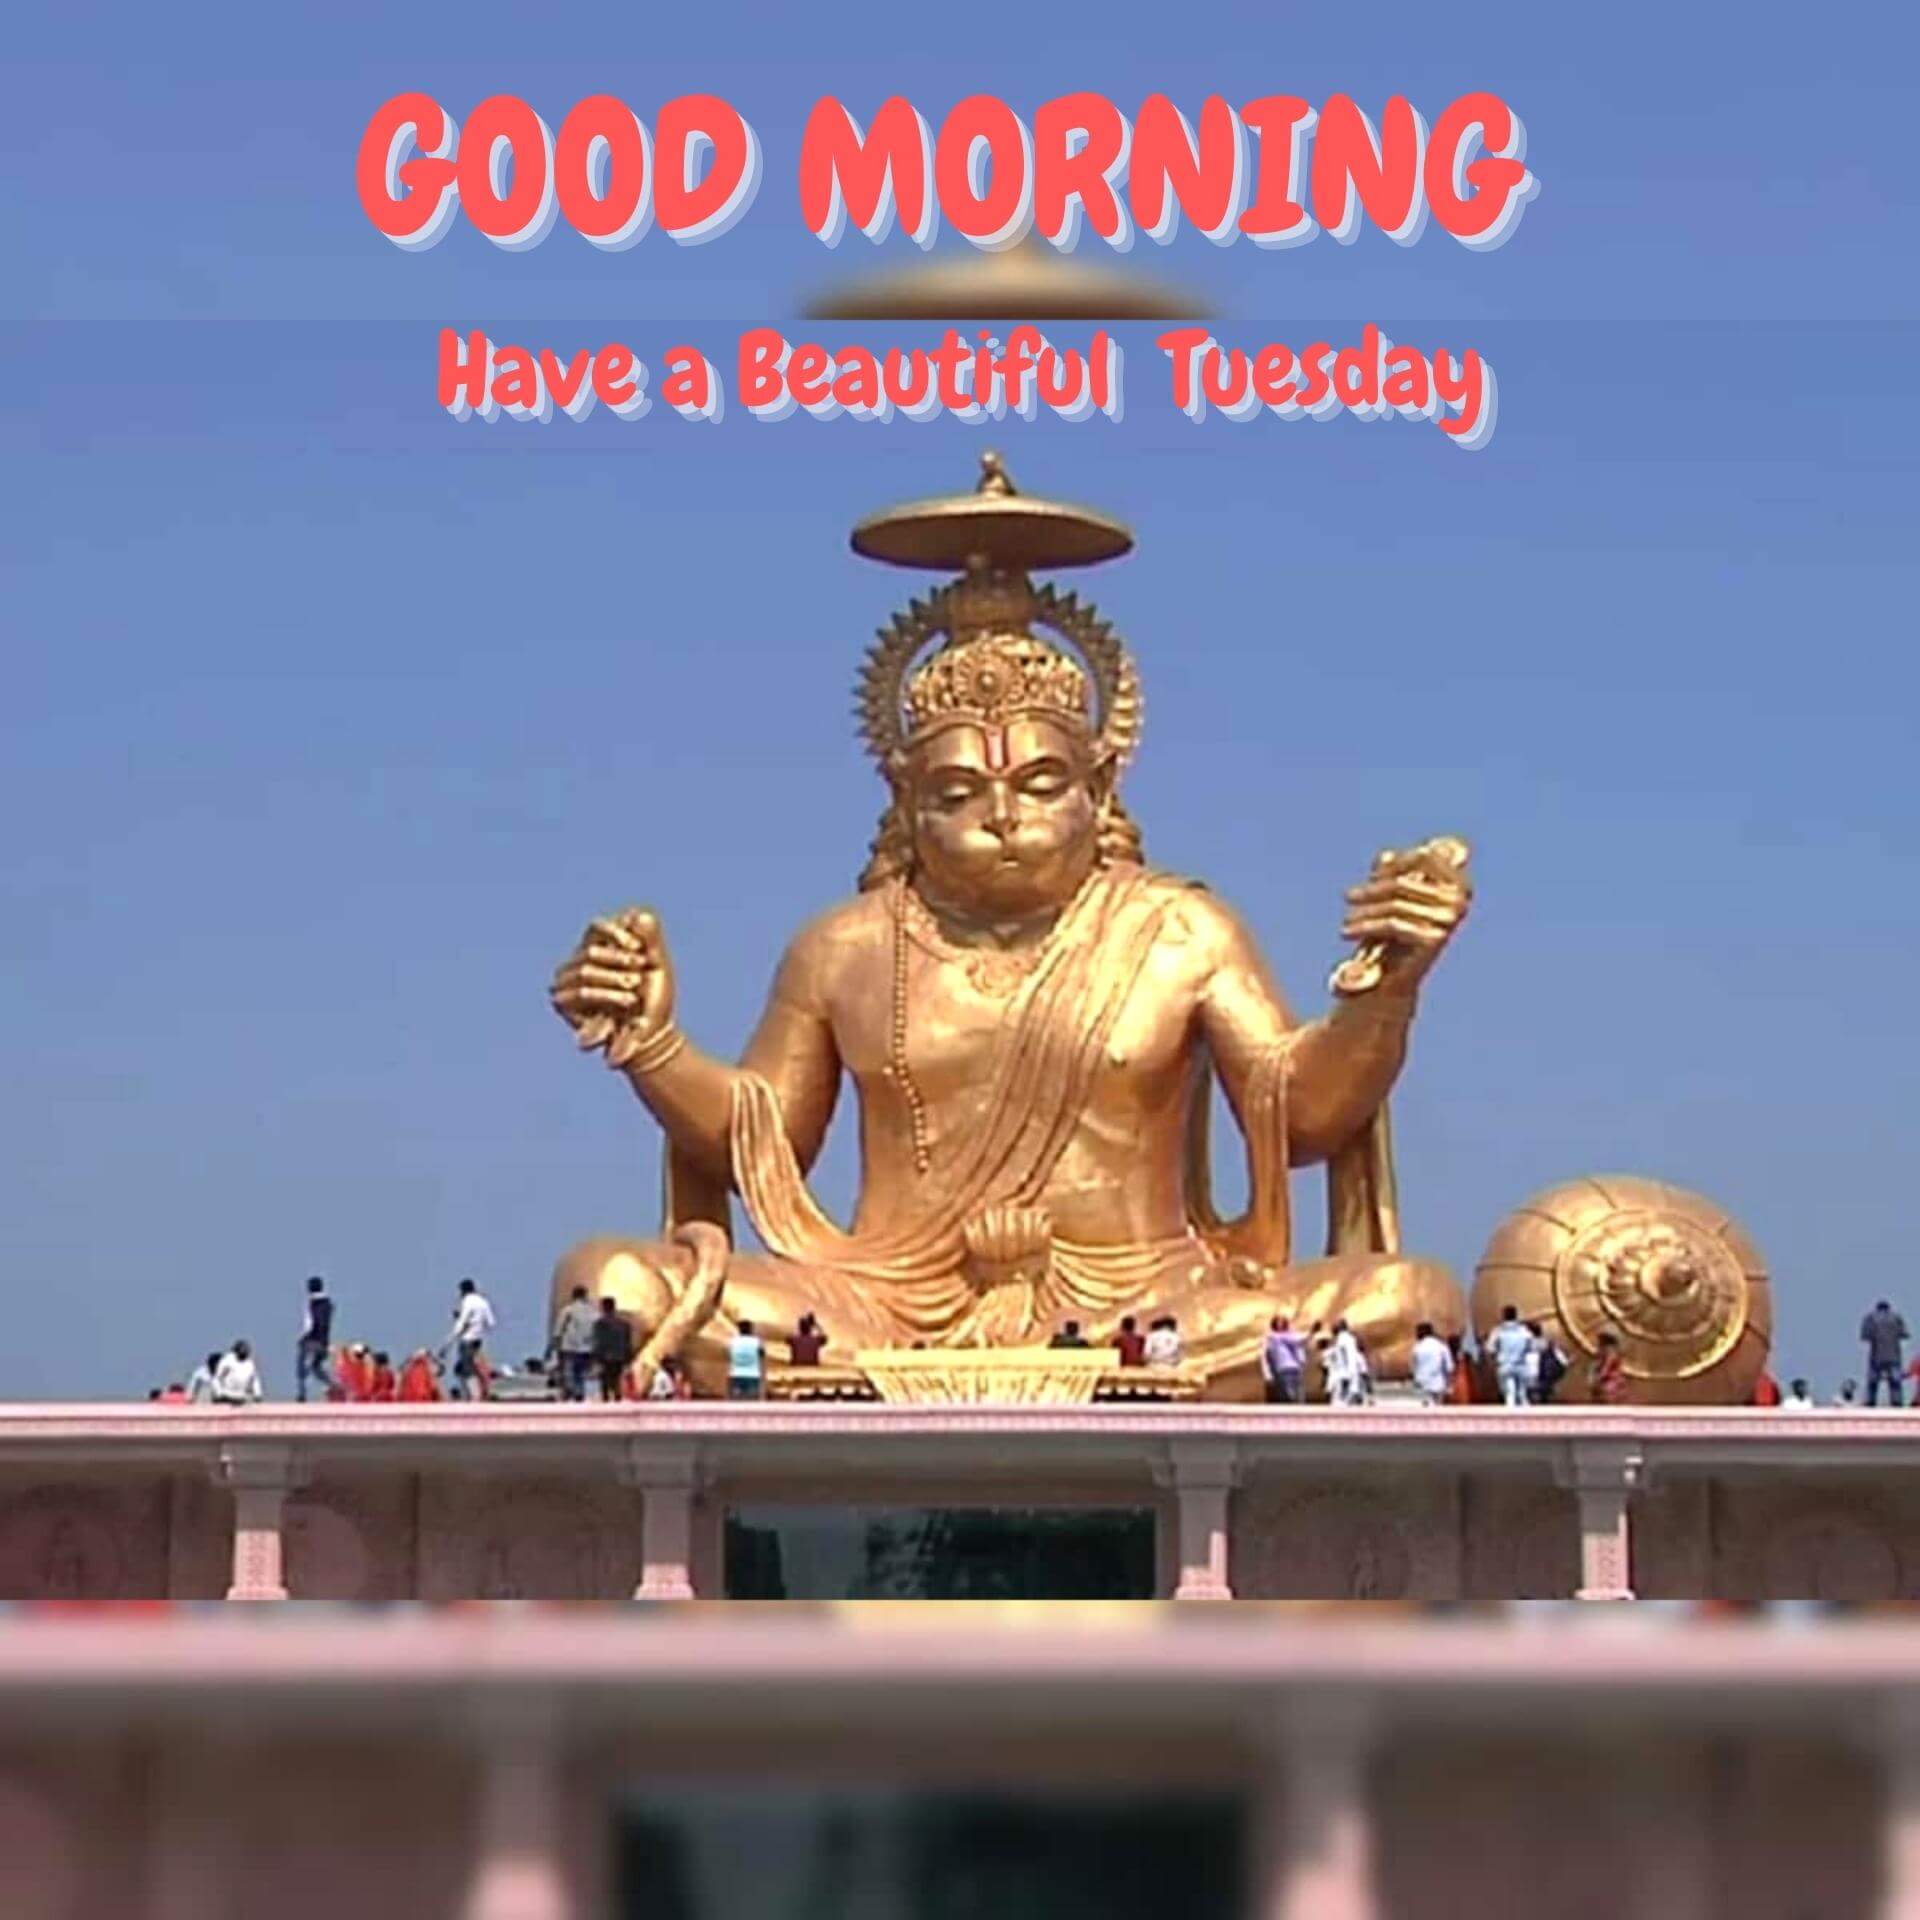 God Hanuman JI Tuesday good morning Images Download Free